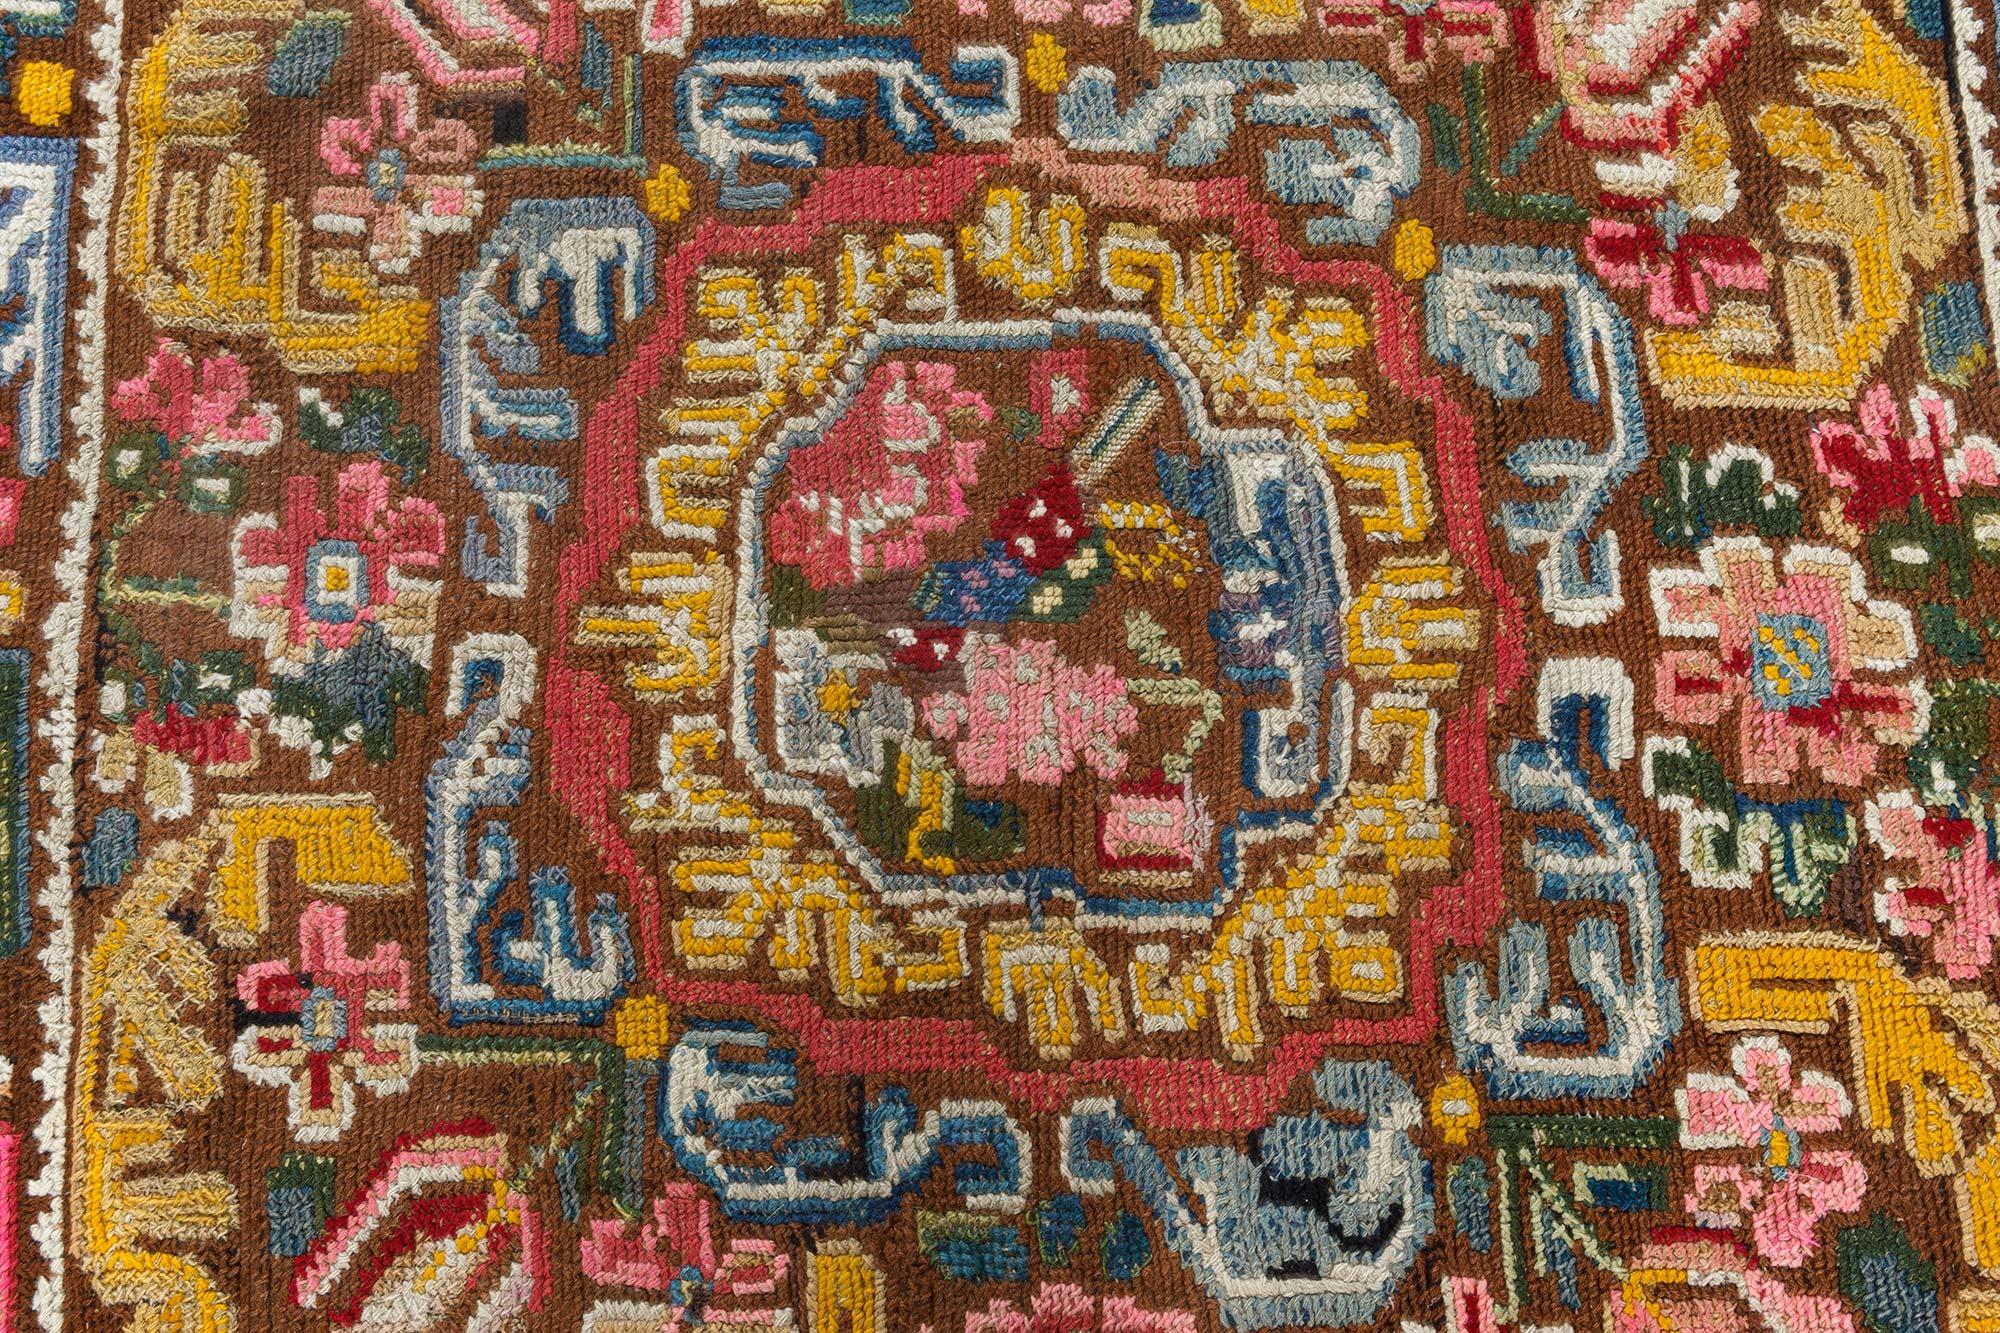 19th century geometric floral motifs, brown, yellow  needlework carpet
Size: 3'9